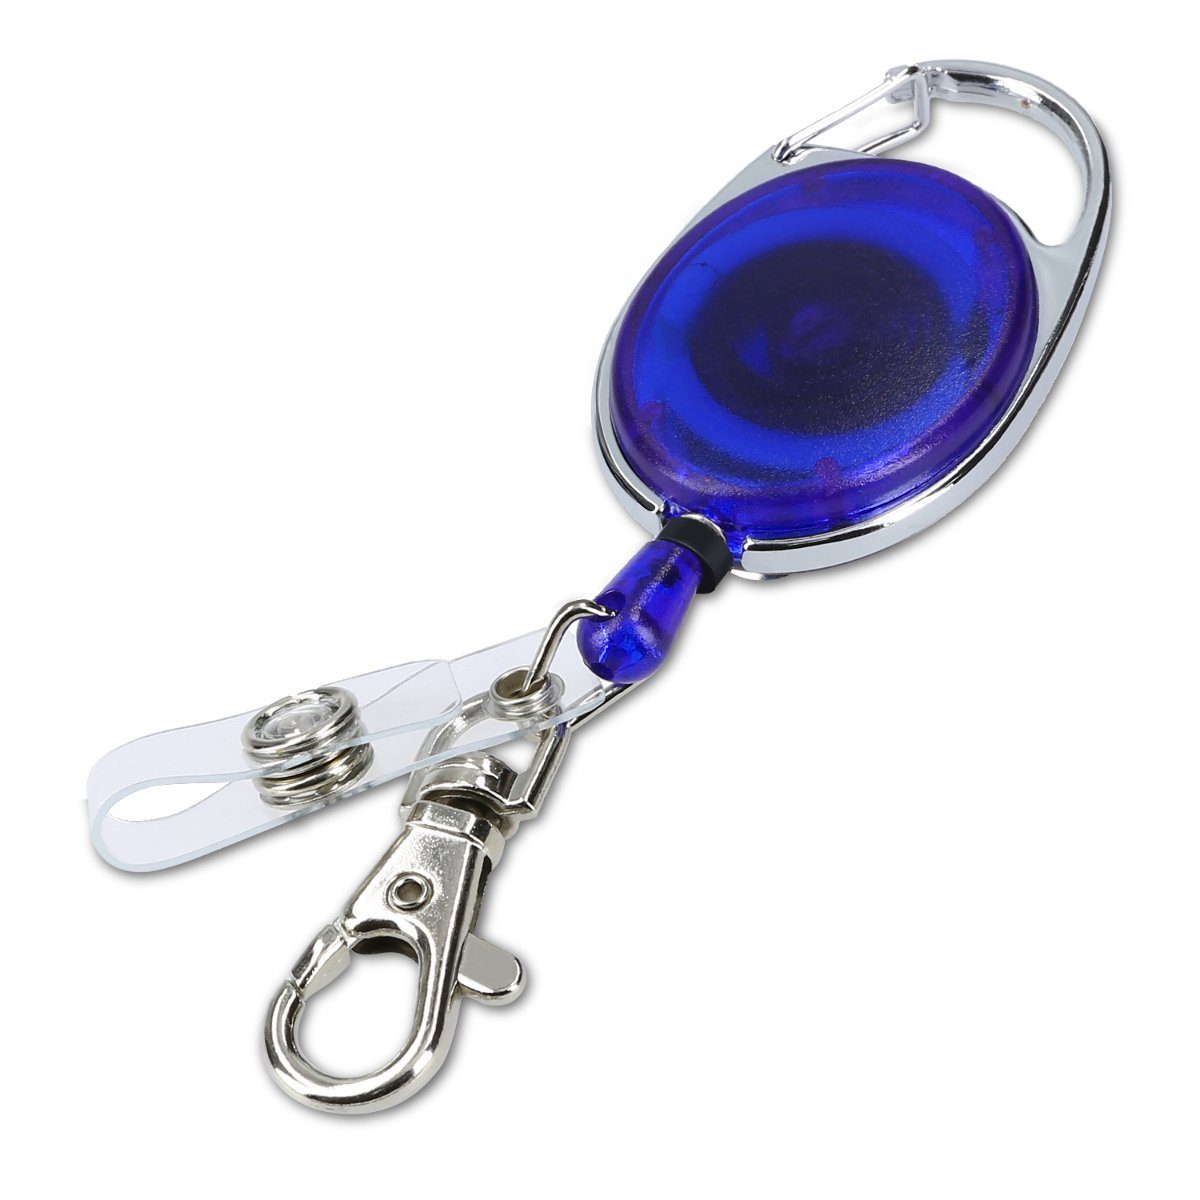 - Blau - Jojo Schlüsselanhänger Clip kwmobile Schlüsselanhänger Ausweis mit Karabiner ausziehbar